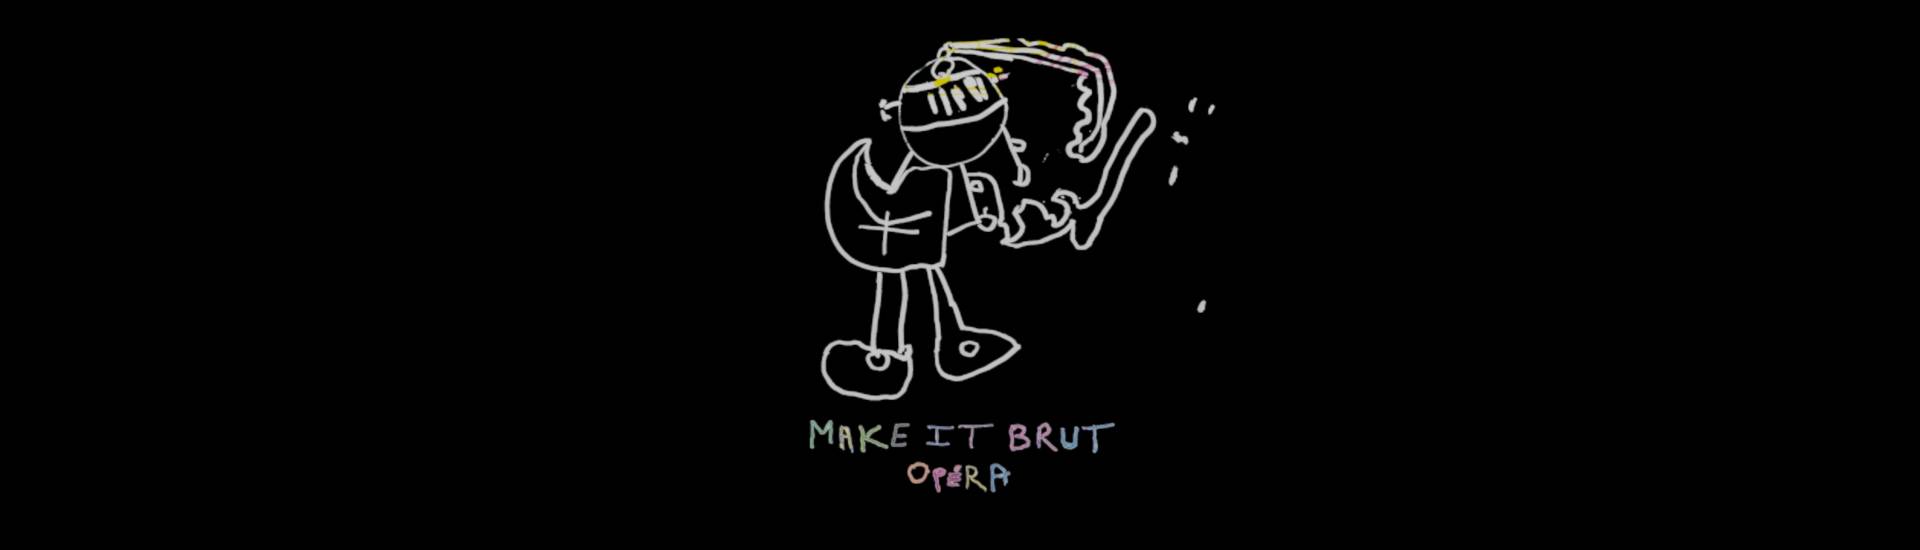 Make it brut Opera